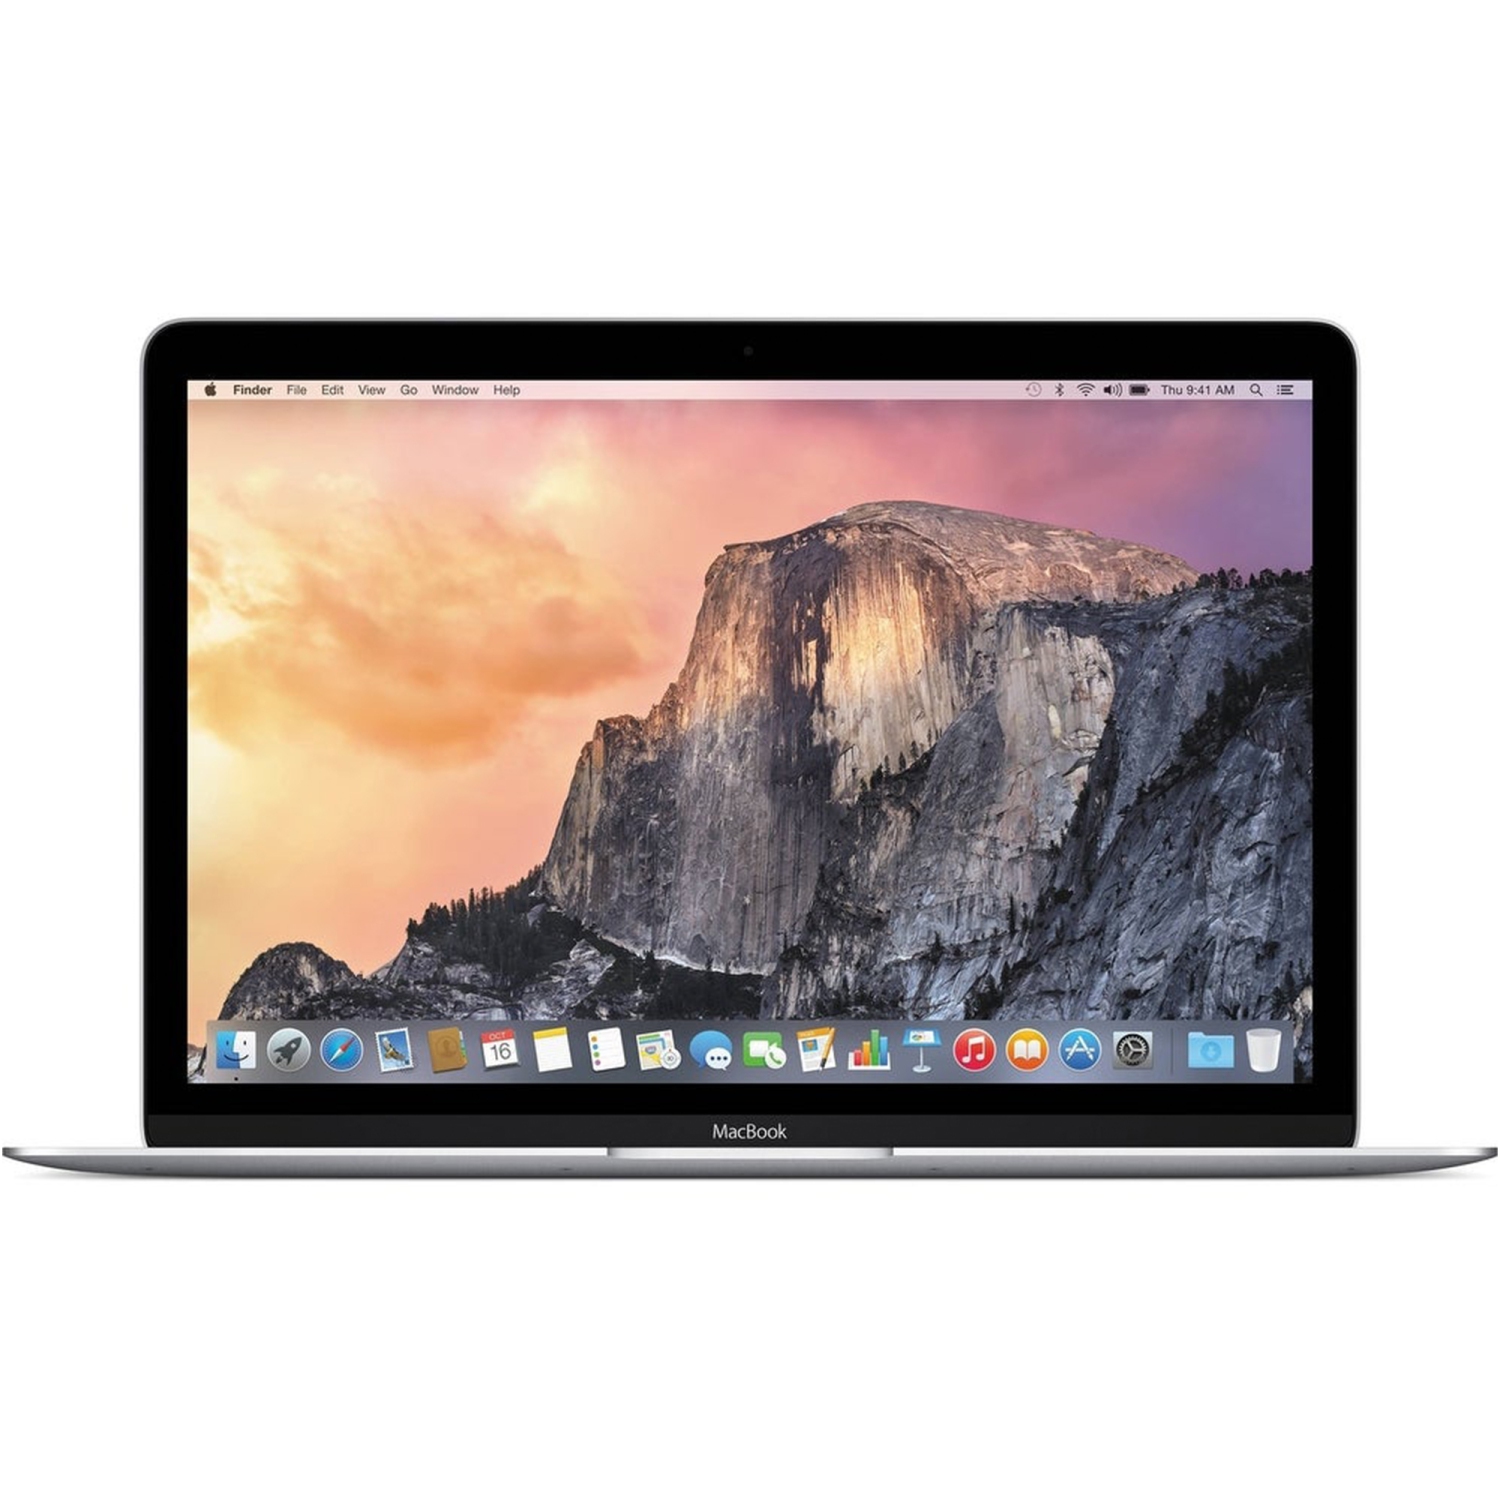 Refurbished (Good) - Apple MacBook Retina12-inch Early 2015, Intel